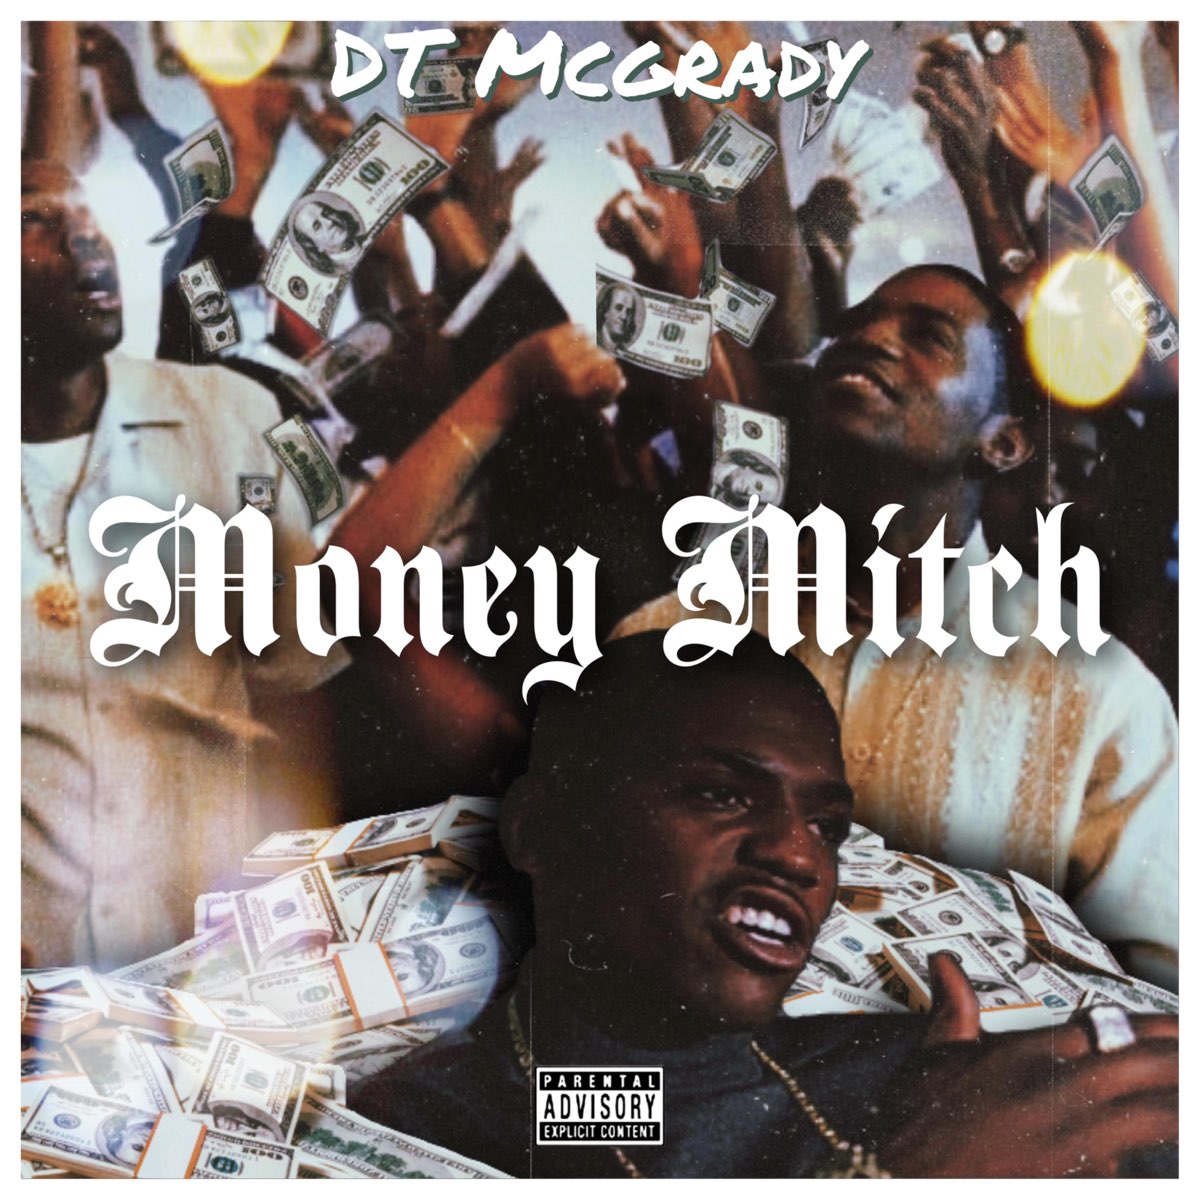 Money Making Mitch - Apple Music